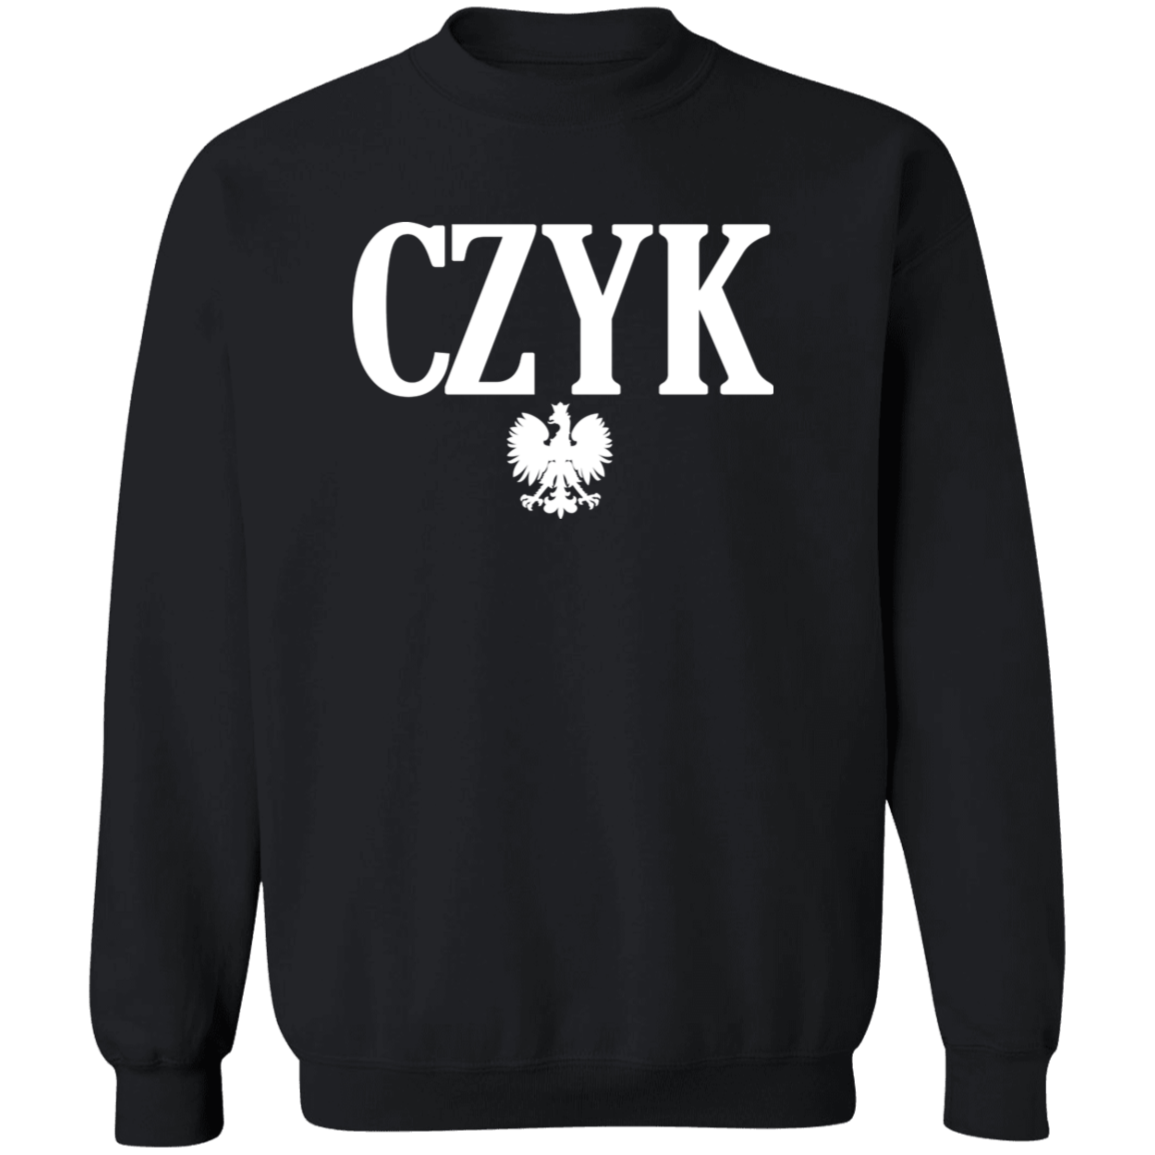 CZYK Polish Surname Ending Apparel CustomCat G180 Crewneck Pullover Sweatshirt Black S